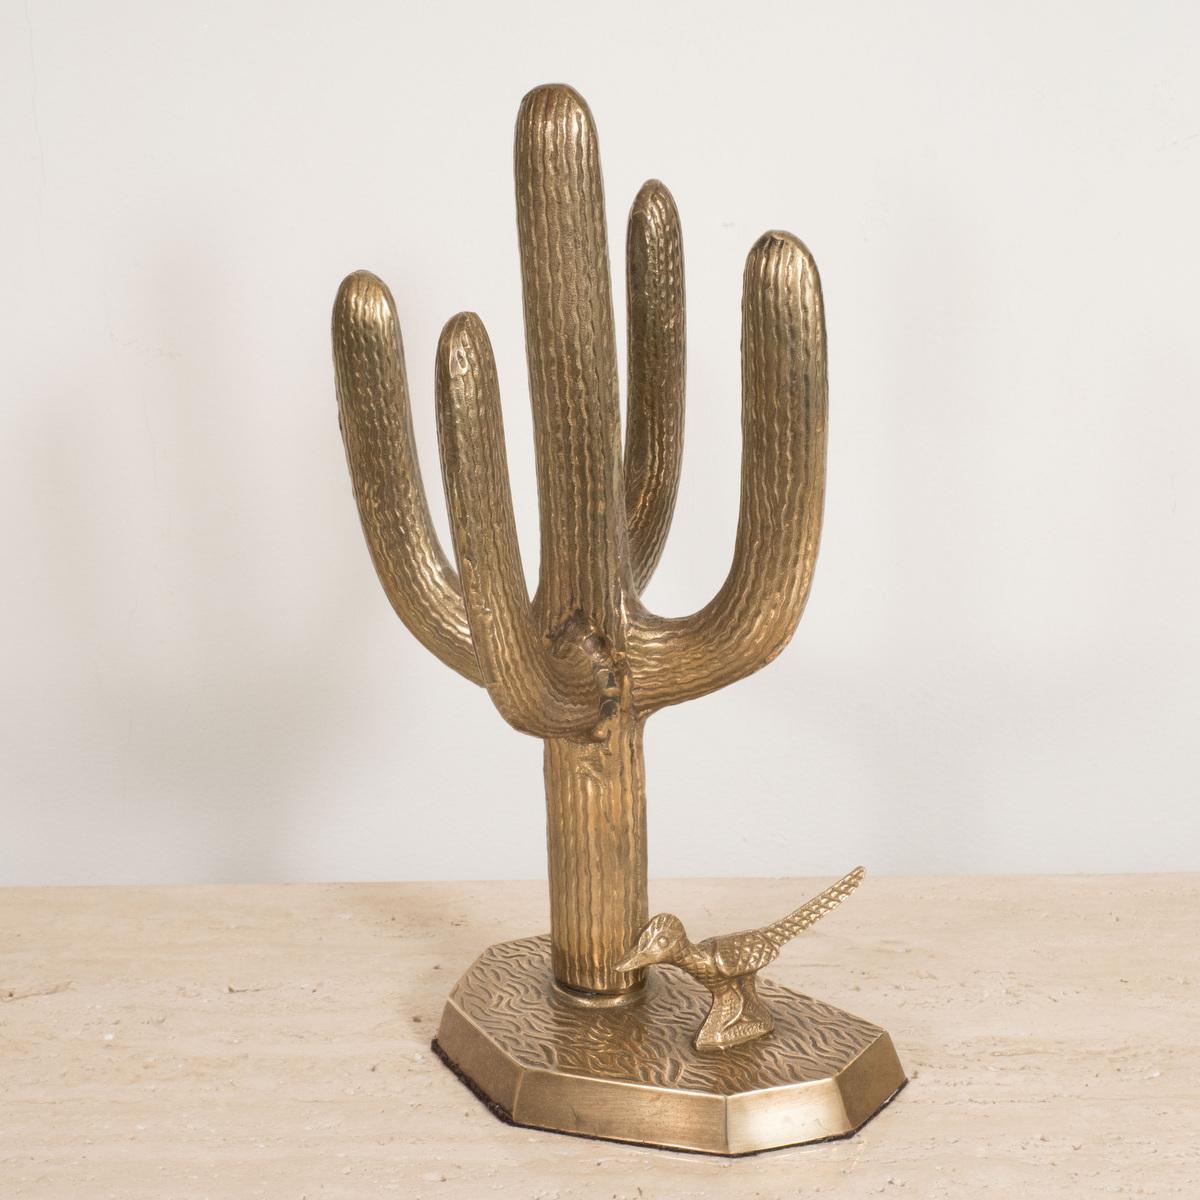 Textured brass cactus sculpture.